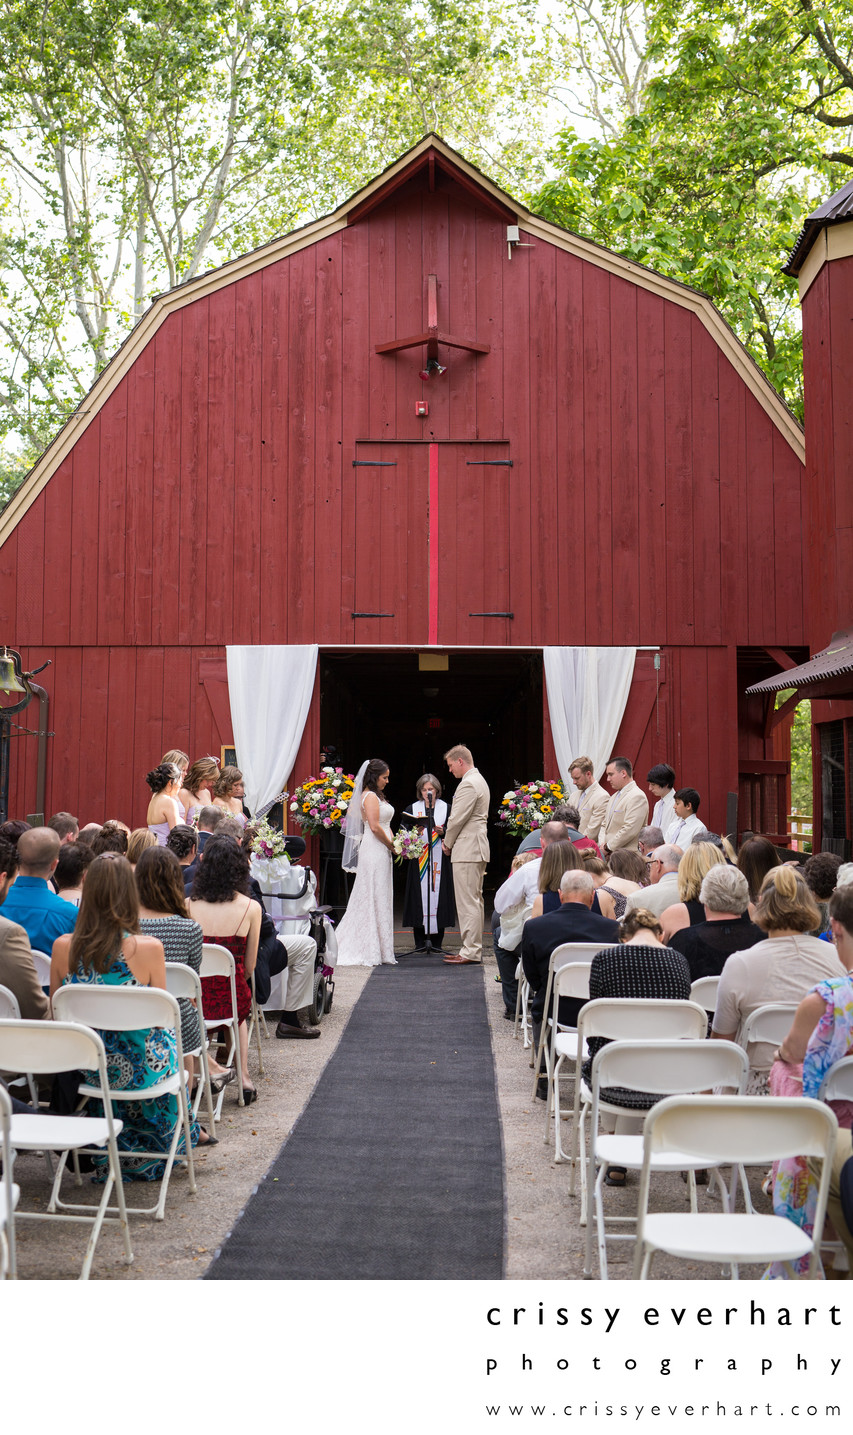 Elmwood Park Zoo Red Barn Wedding Ceremony